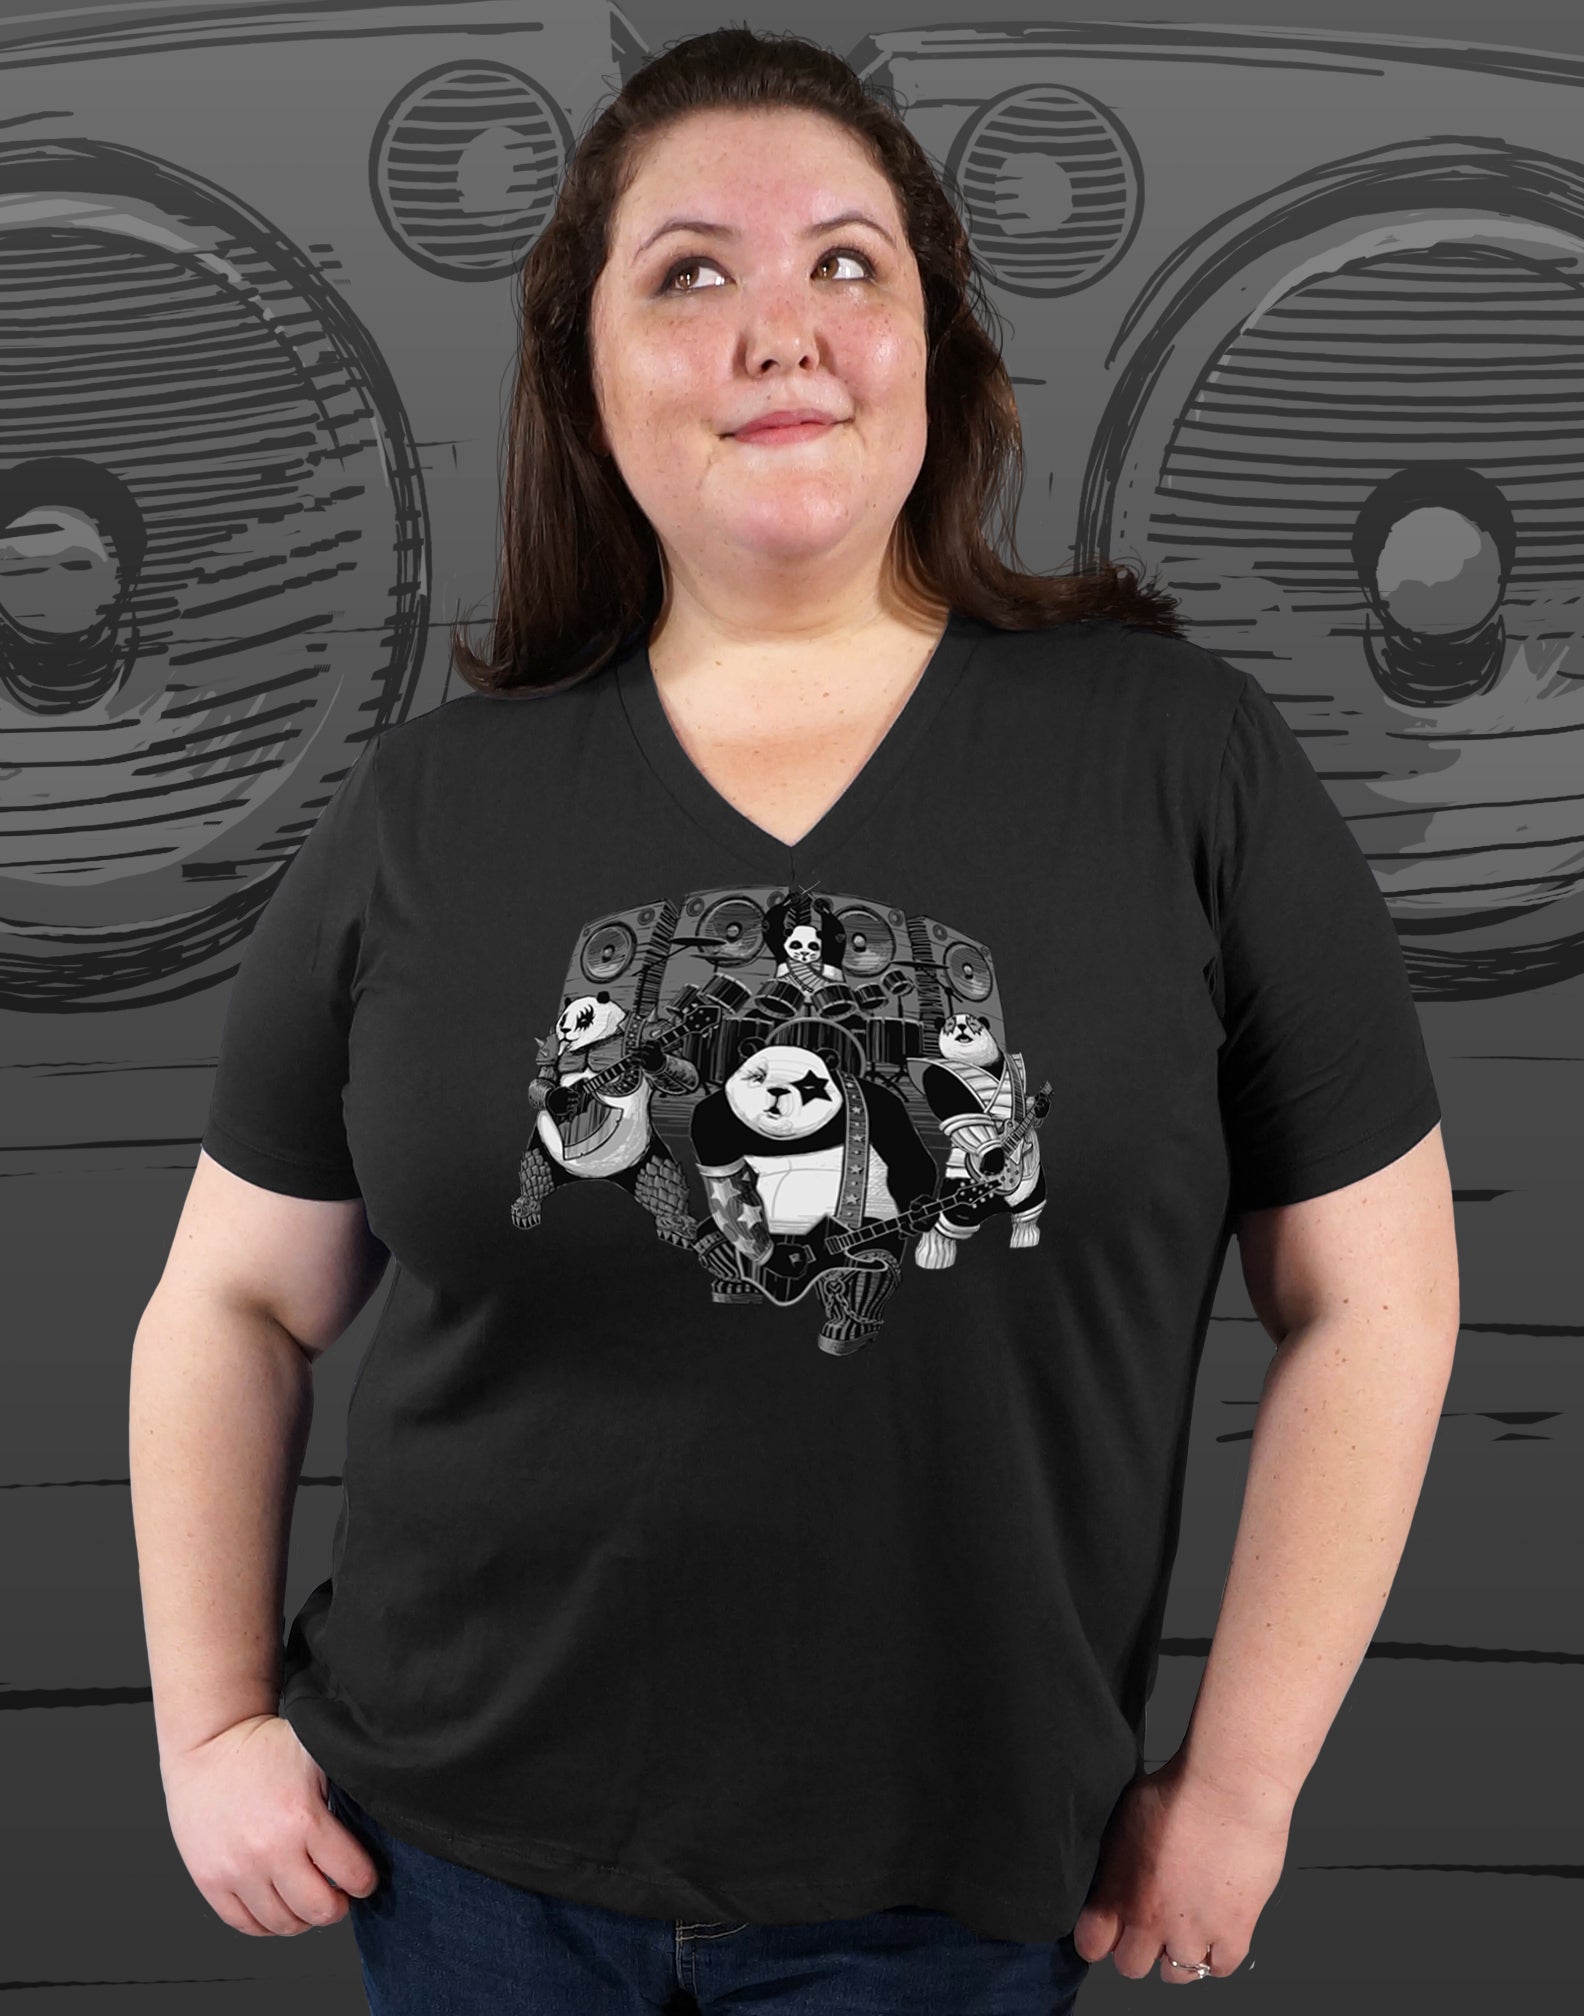 Peeping Panda Women Plus Size T-shirt